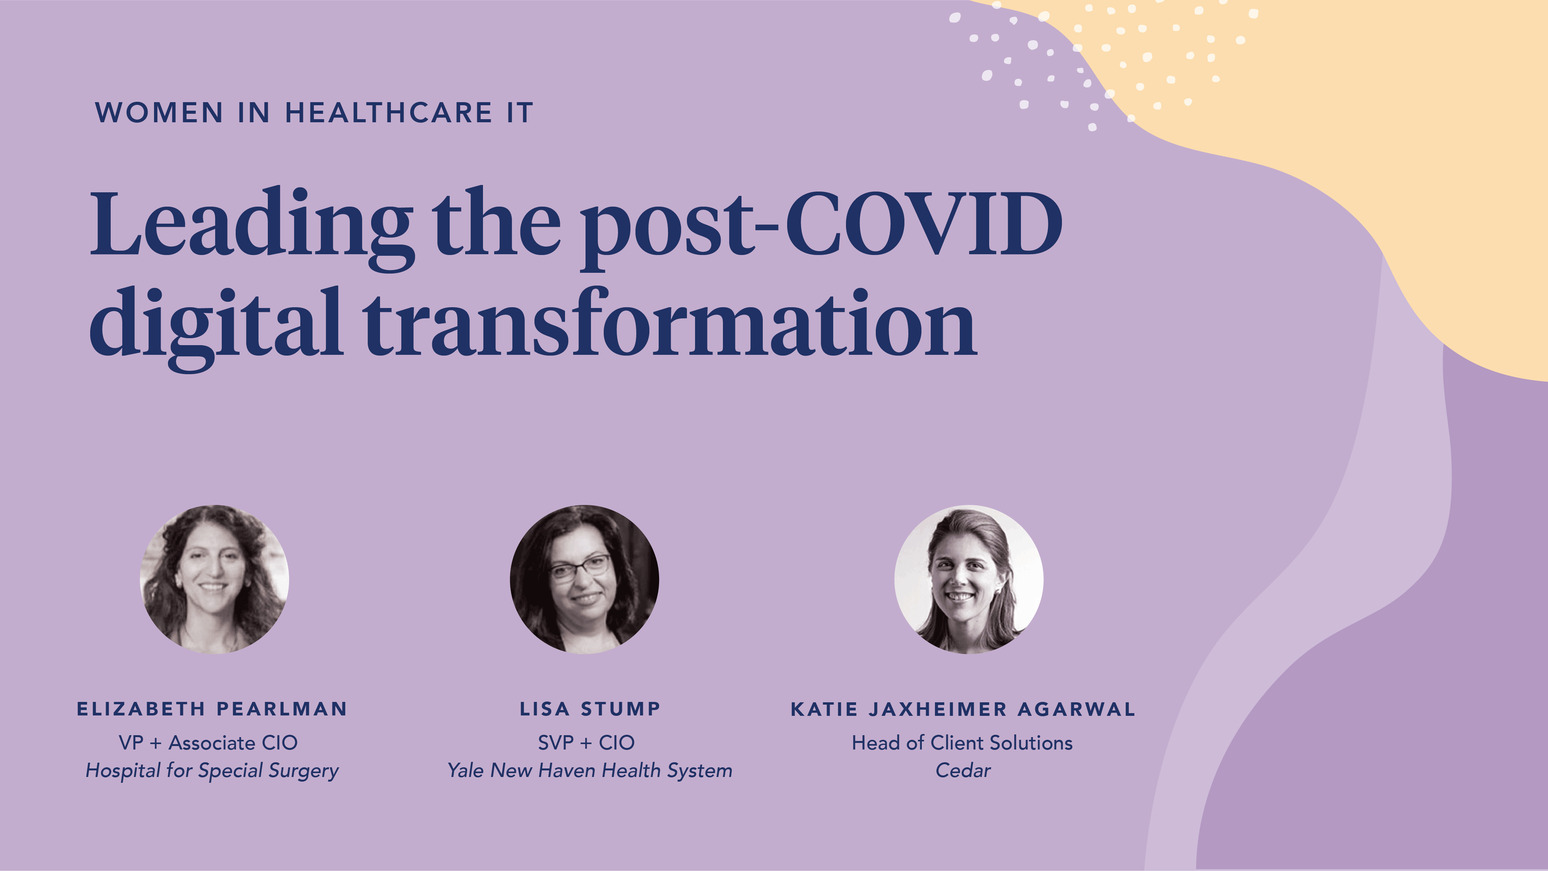 Women in Healthcare IT: Leading the post-COVID digital transformation